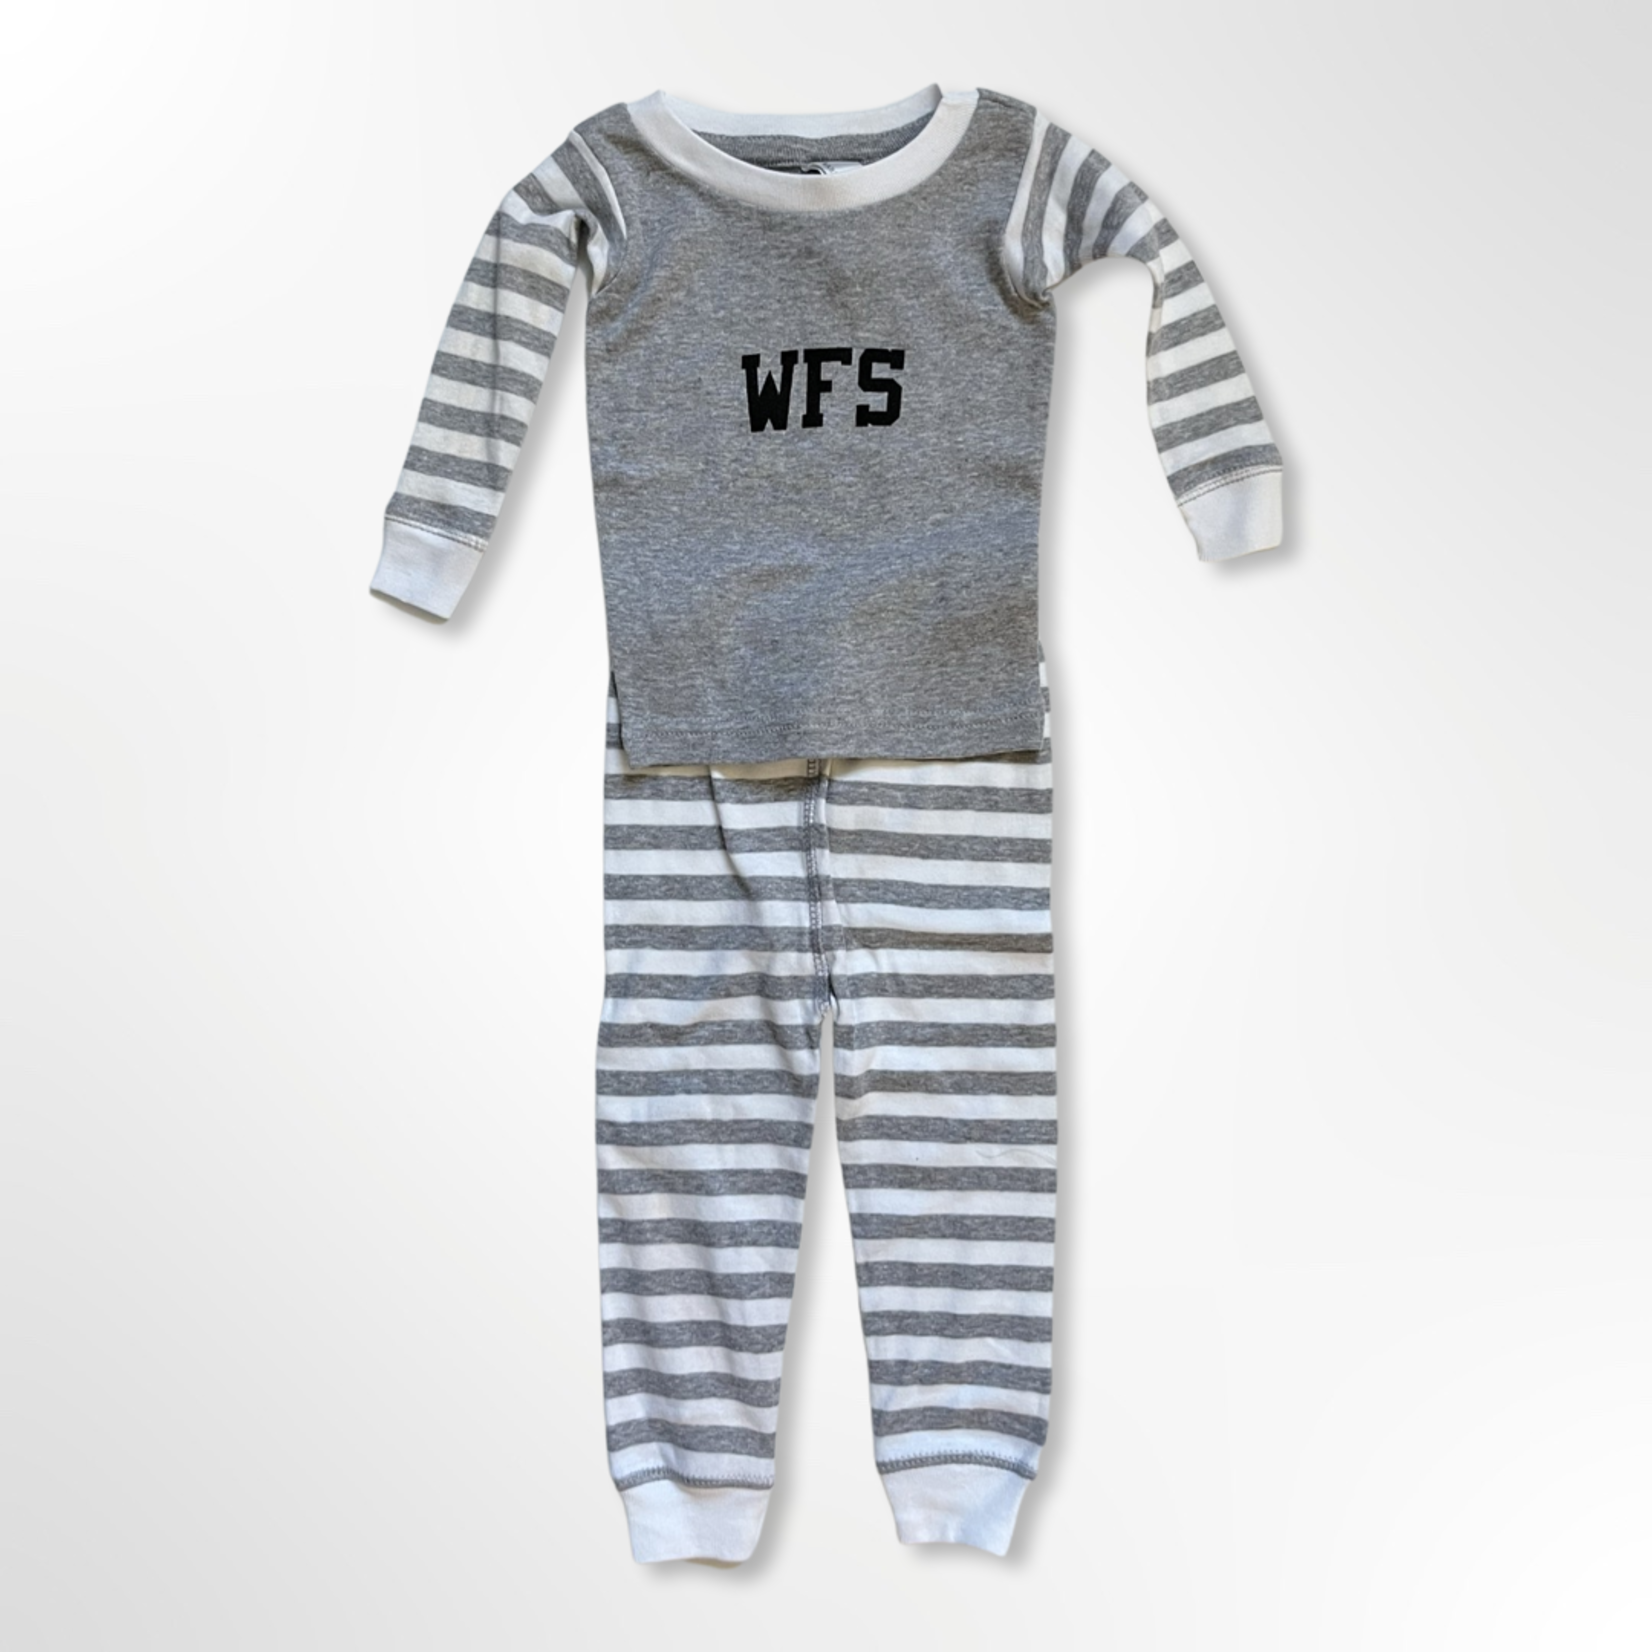 Rabbit Skins Infant WFS pajamas